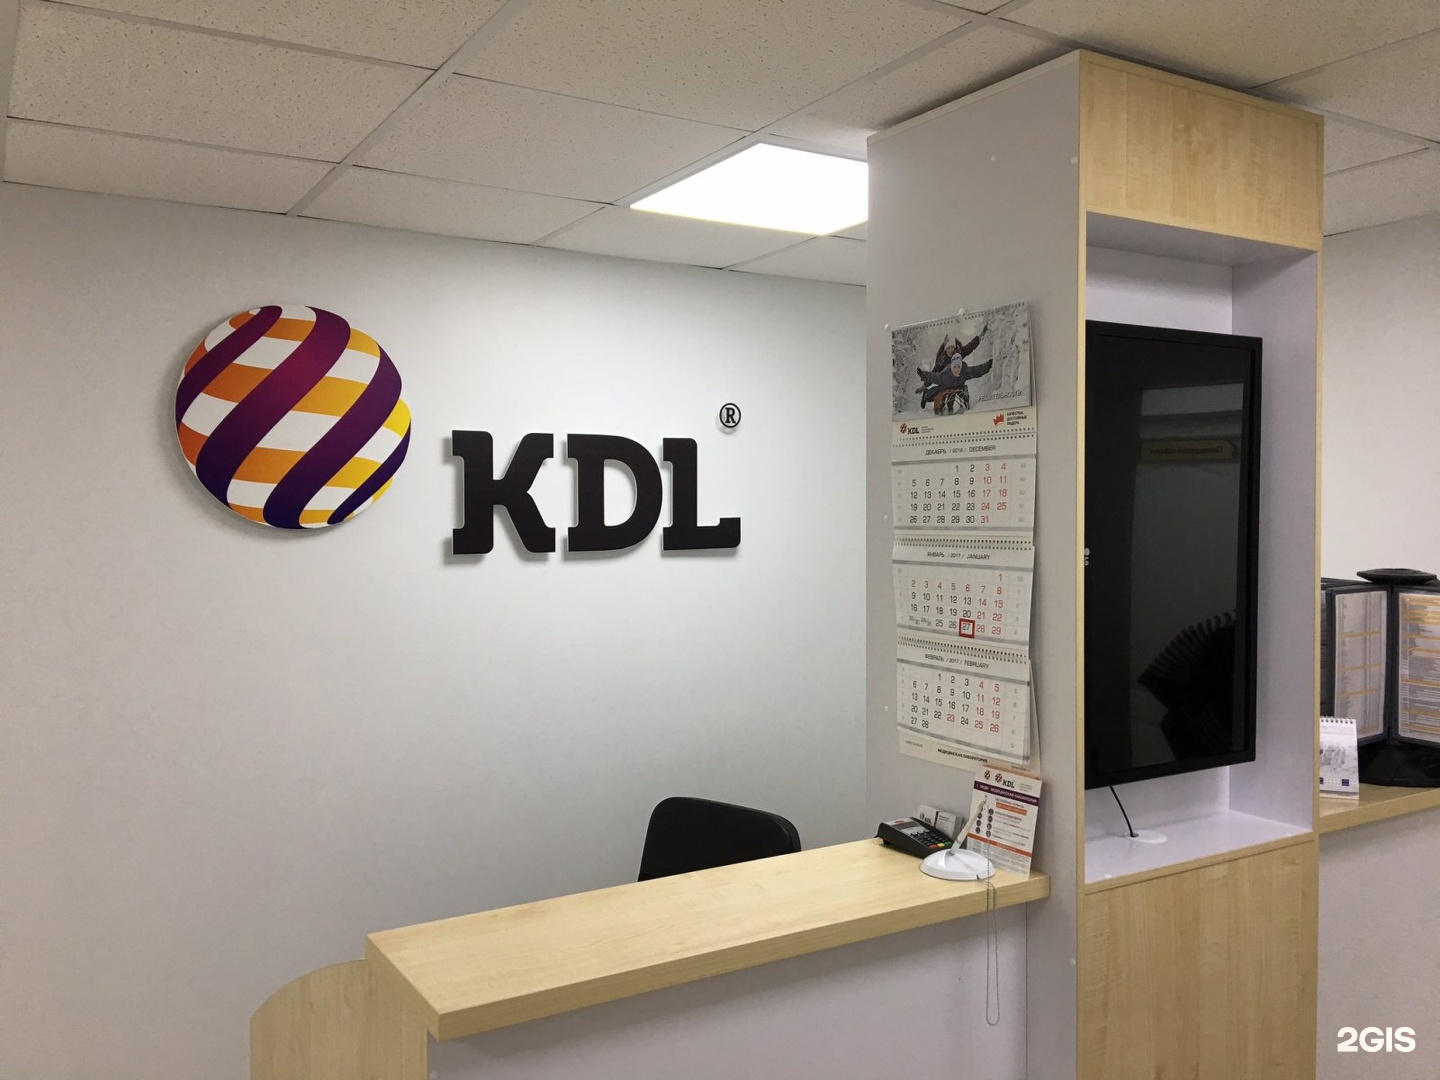 50 кдл. КДЛ лаборатория Омск. KDL логотип. Эмблема КДЛ лаборатории. KDL В Омске.